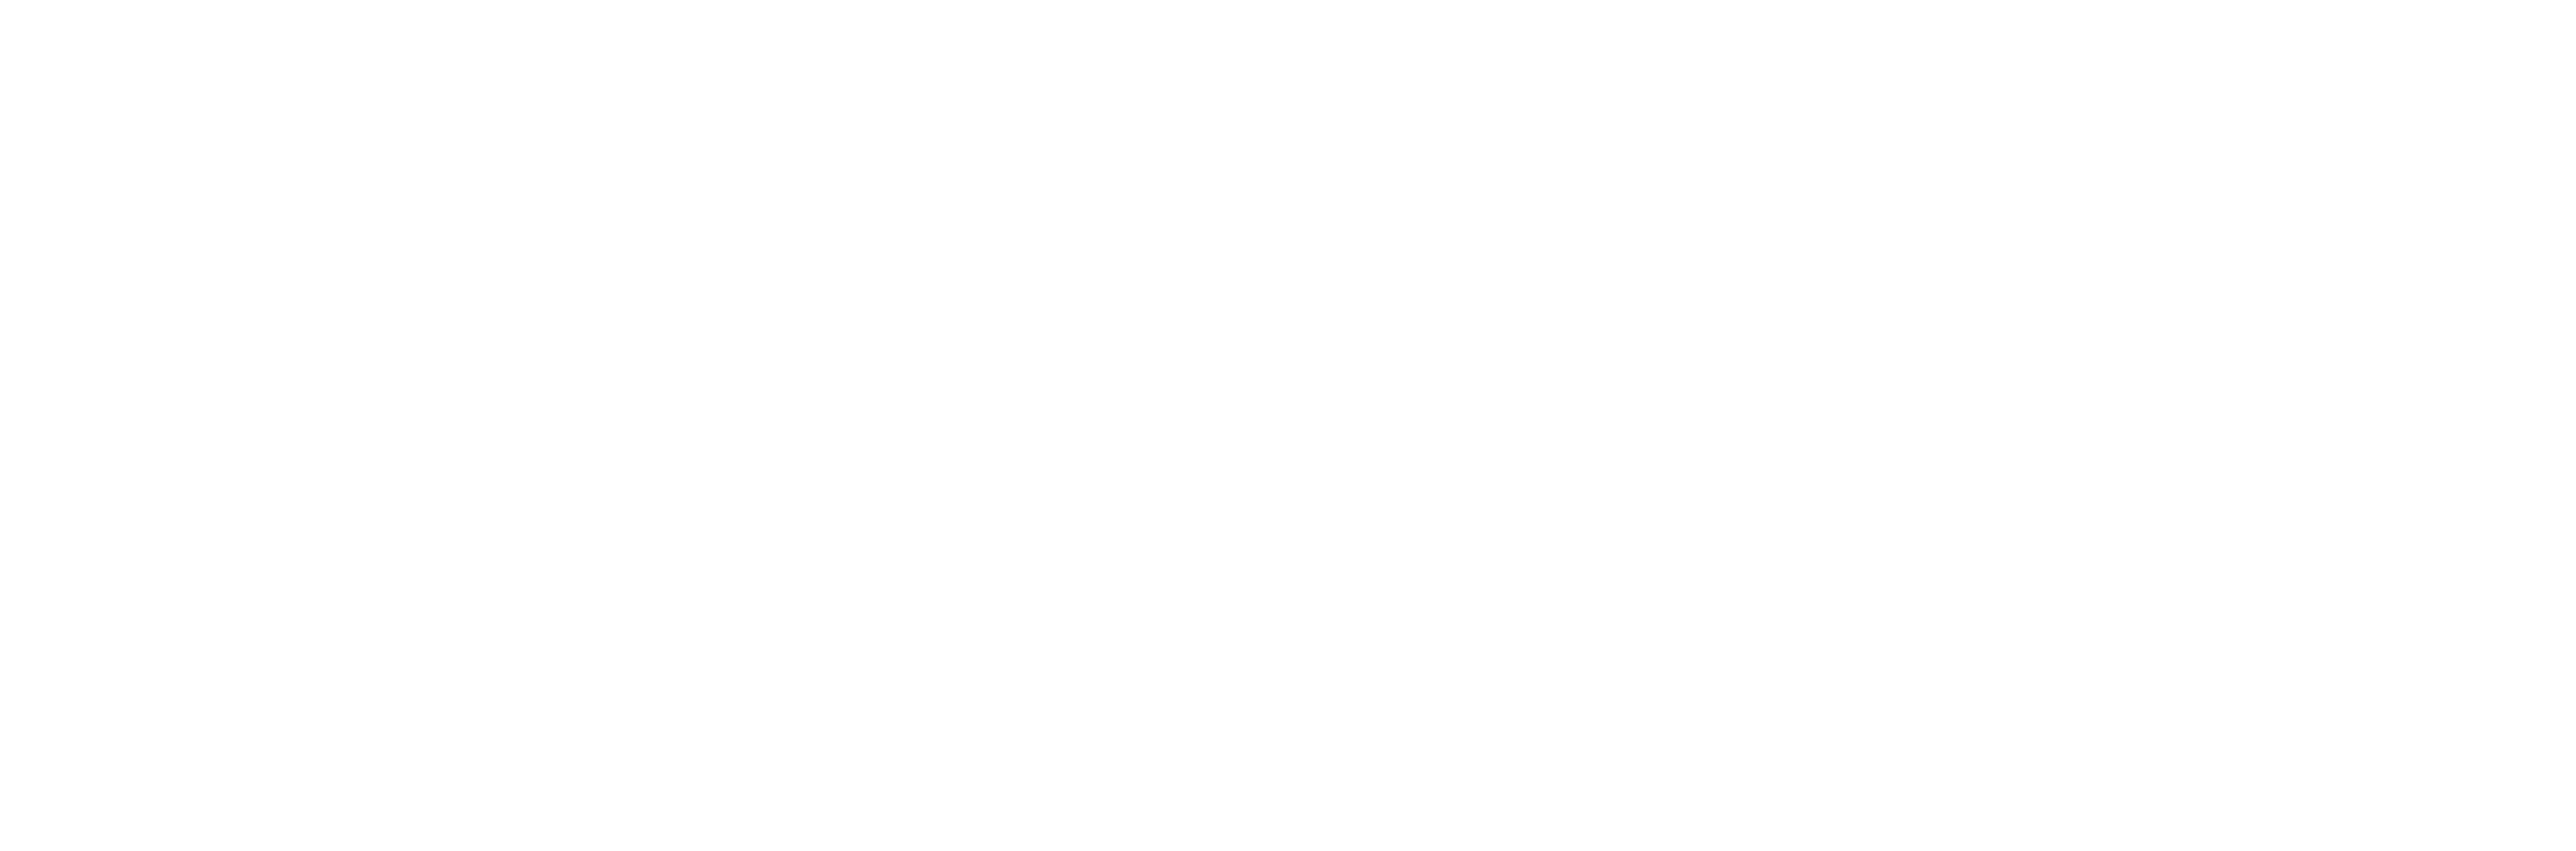 Florida Property Management Strategies